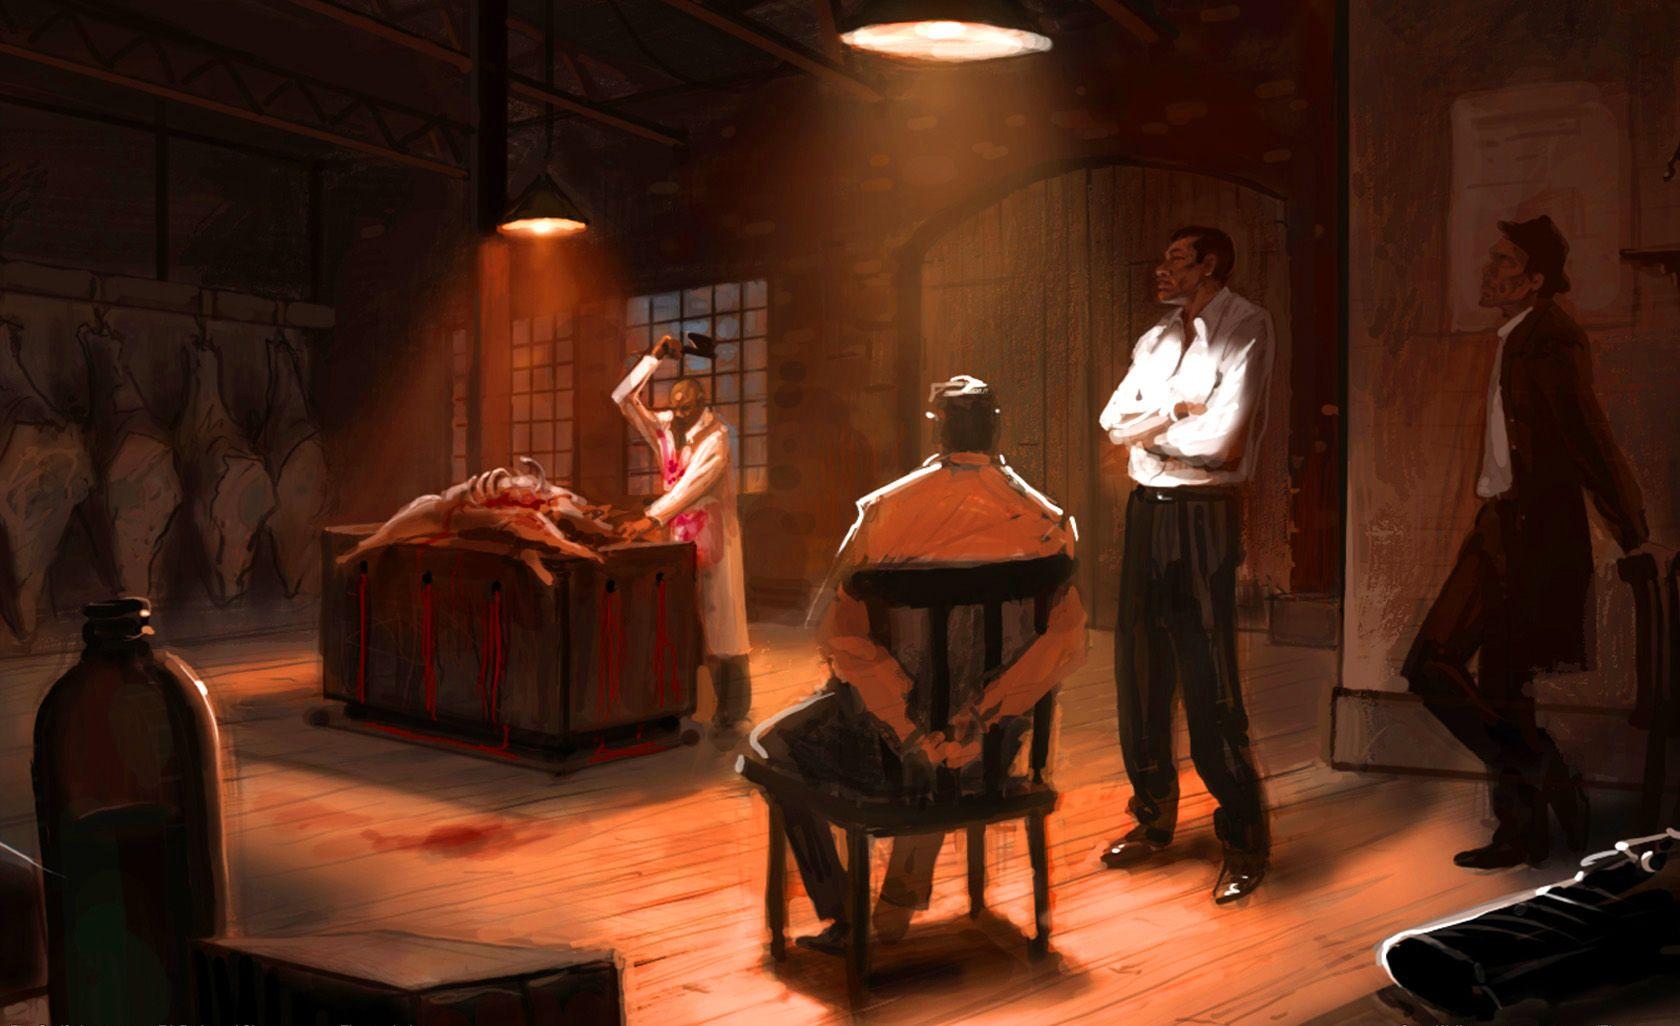 Mafia interrogation in a butcher shop. Gangster War Art in 2019